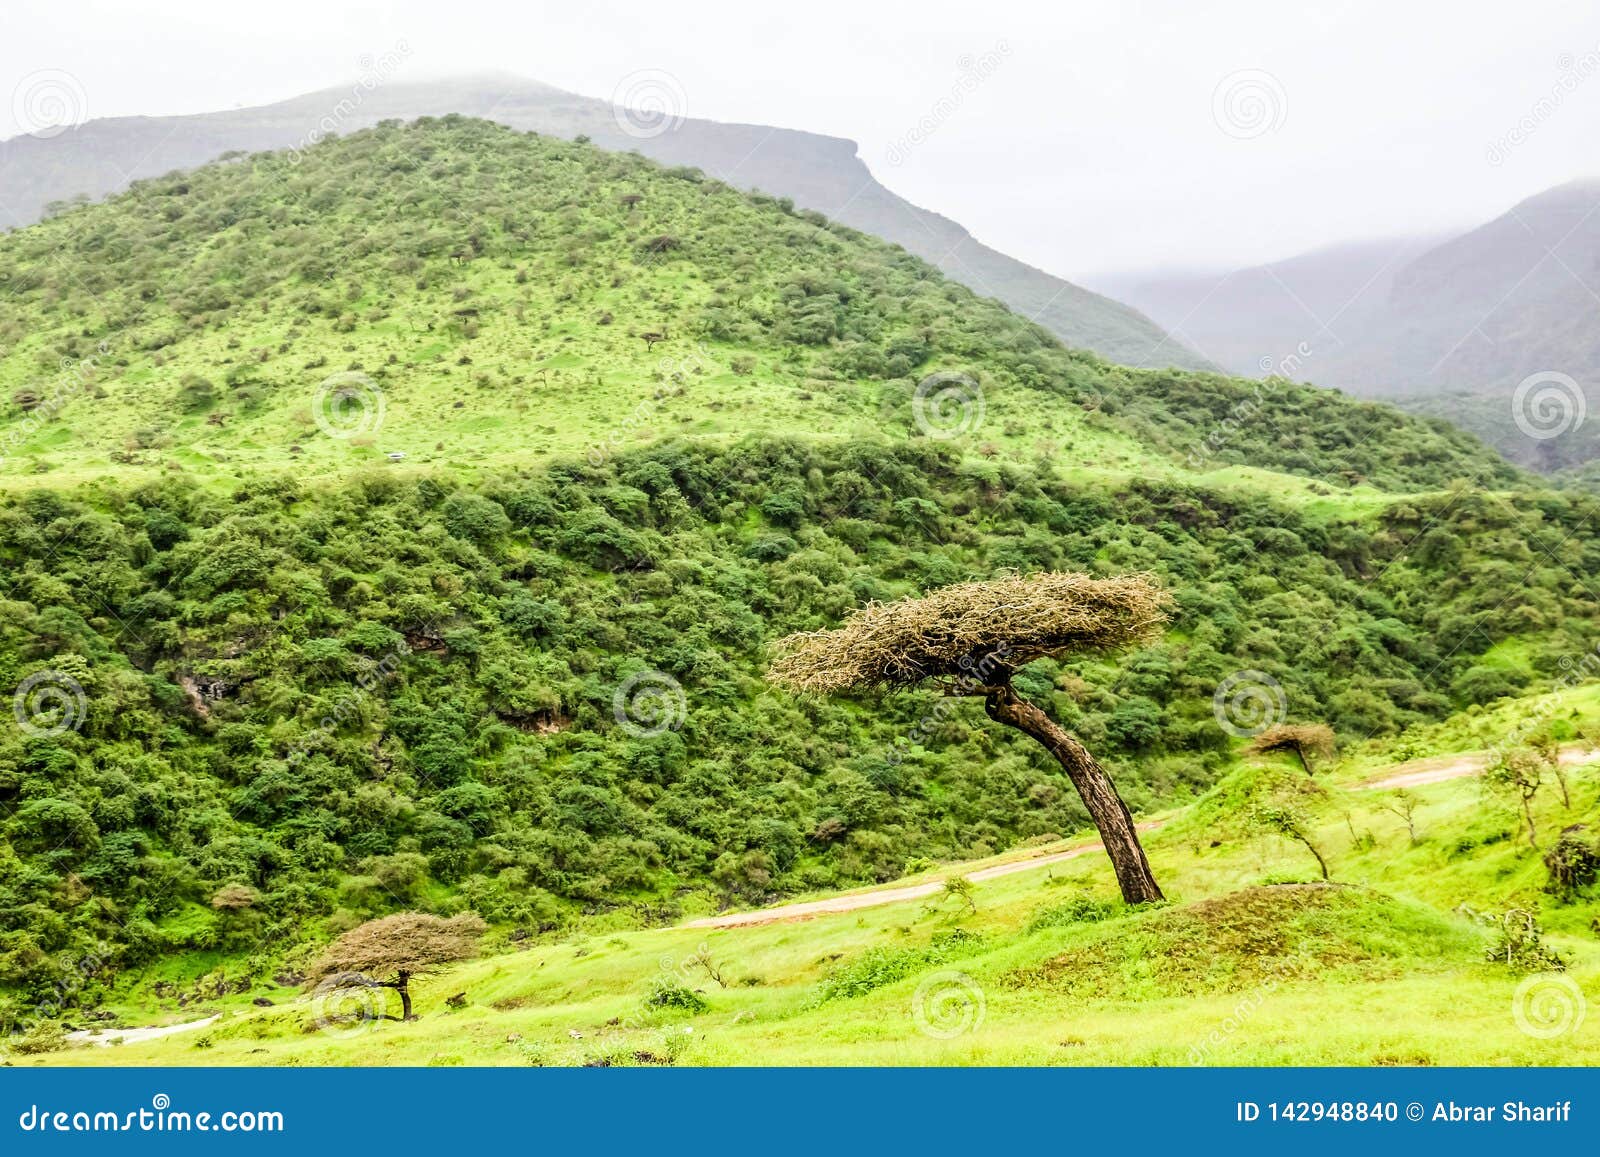 lush green landscape, trees and foggy mountains in ayn khor tourist resort, salalah, oman